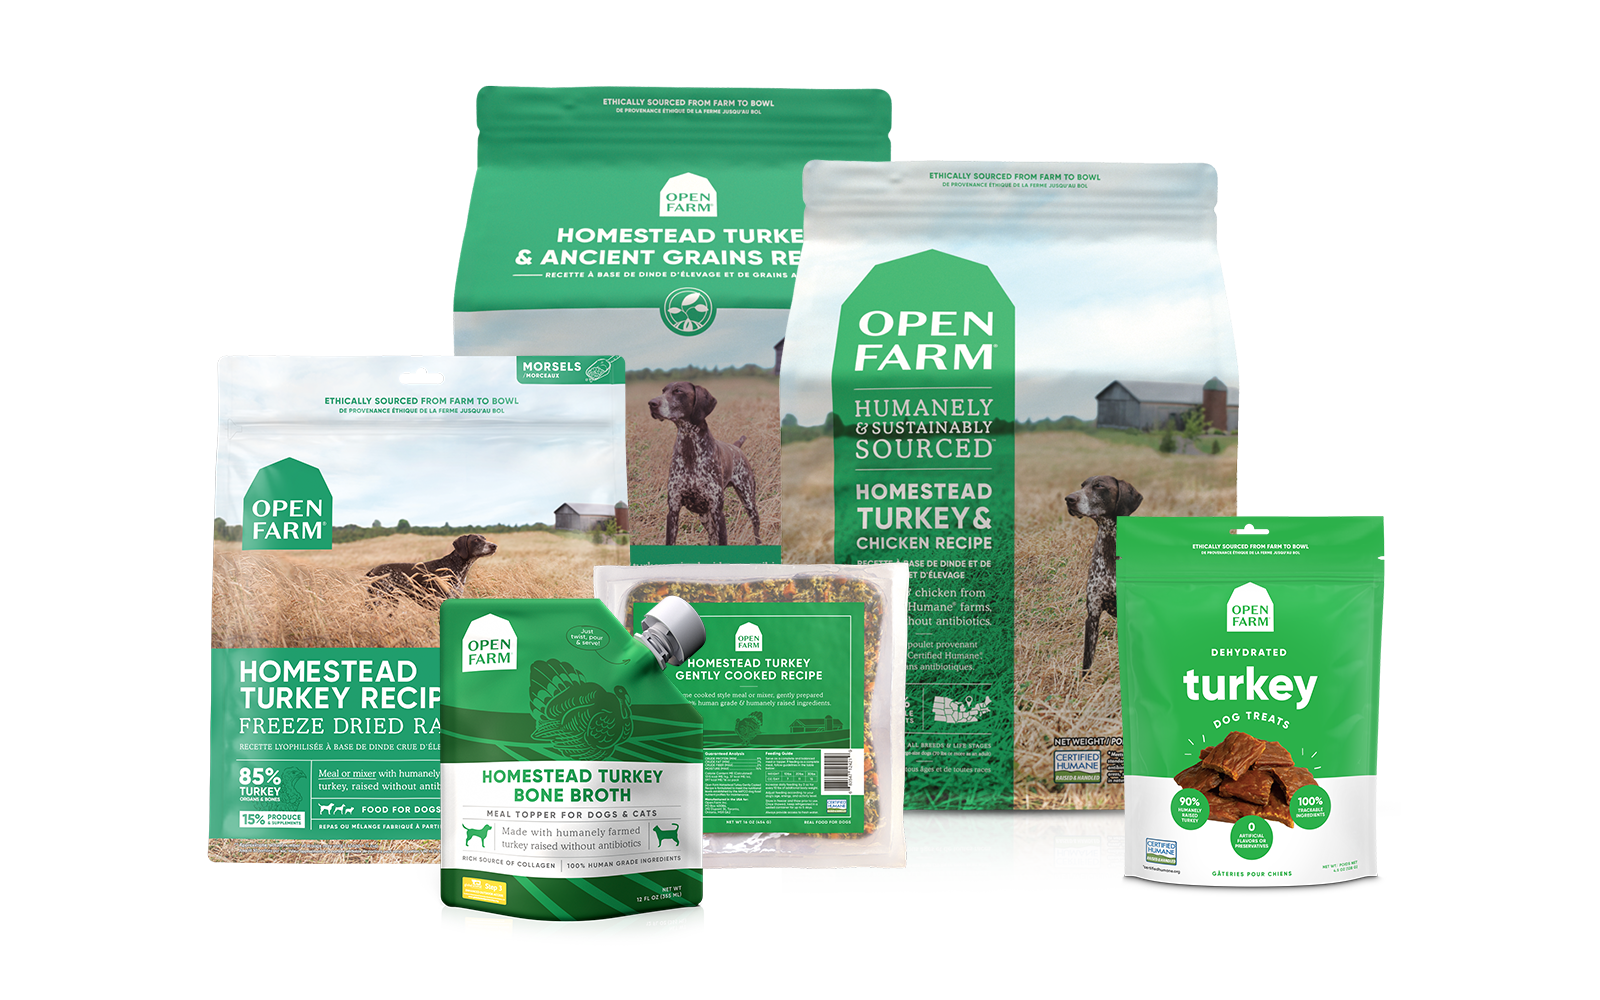 Open Farm Homestead Turkey Collection